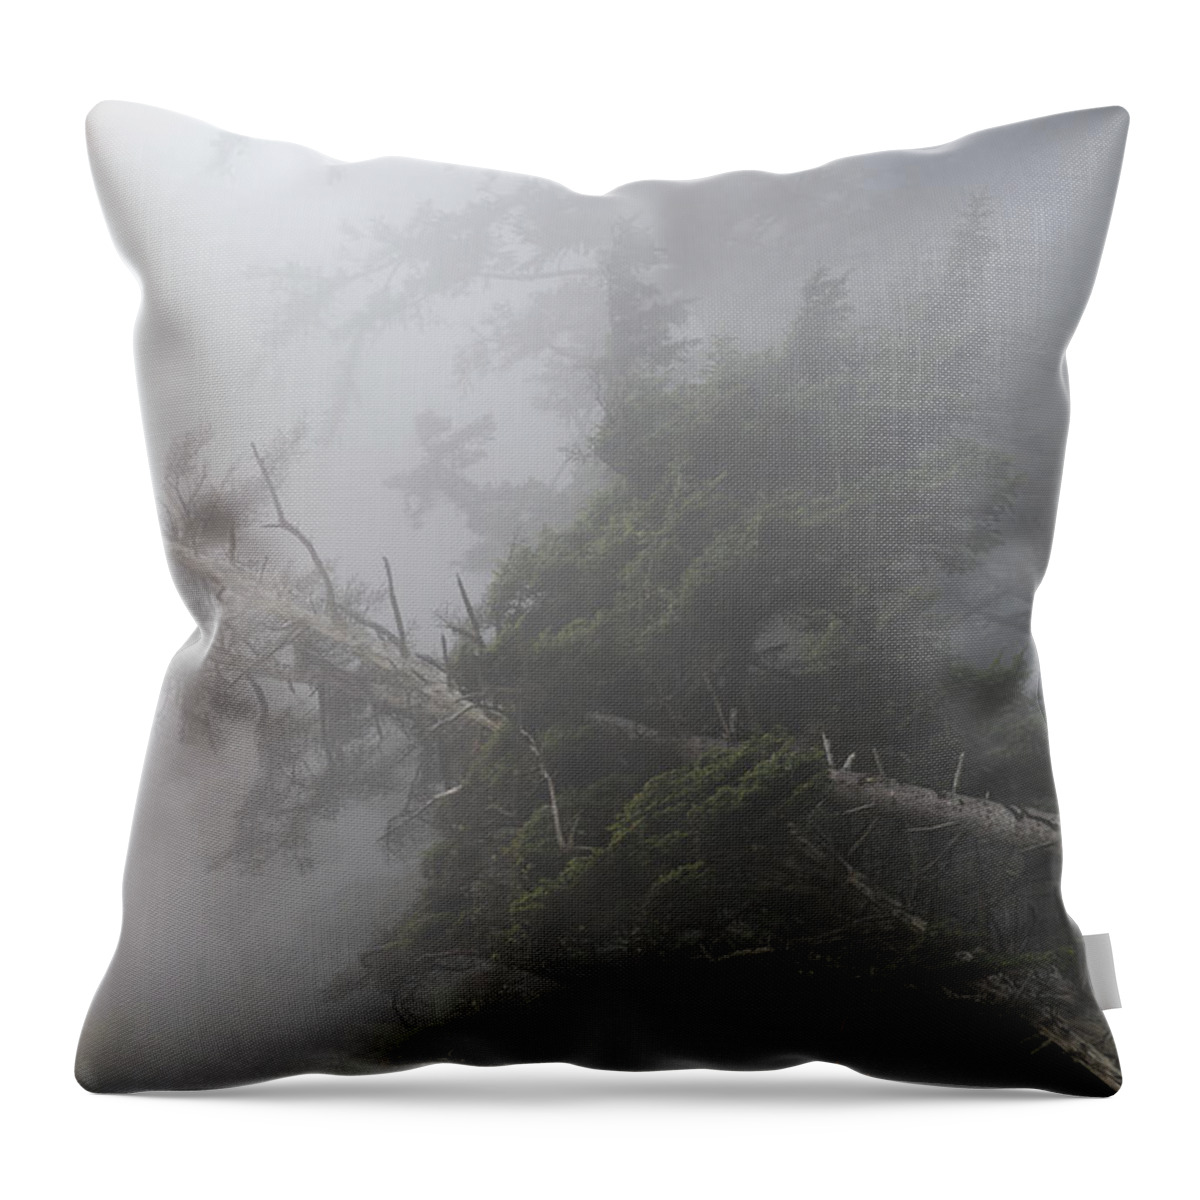 Cannon Beach Throw Pillow featuring the photograph Dense Fog by Robert Potts